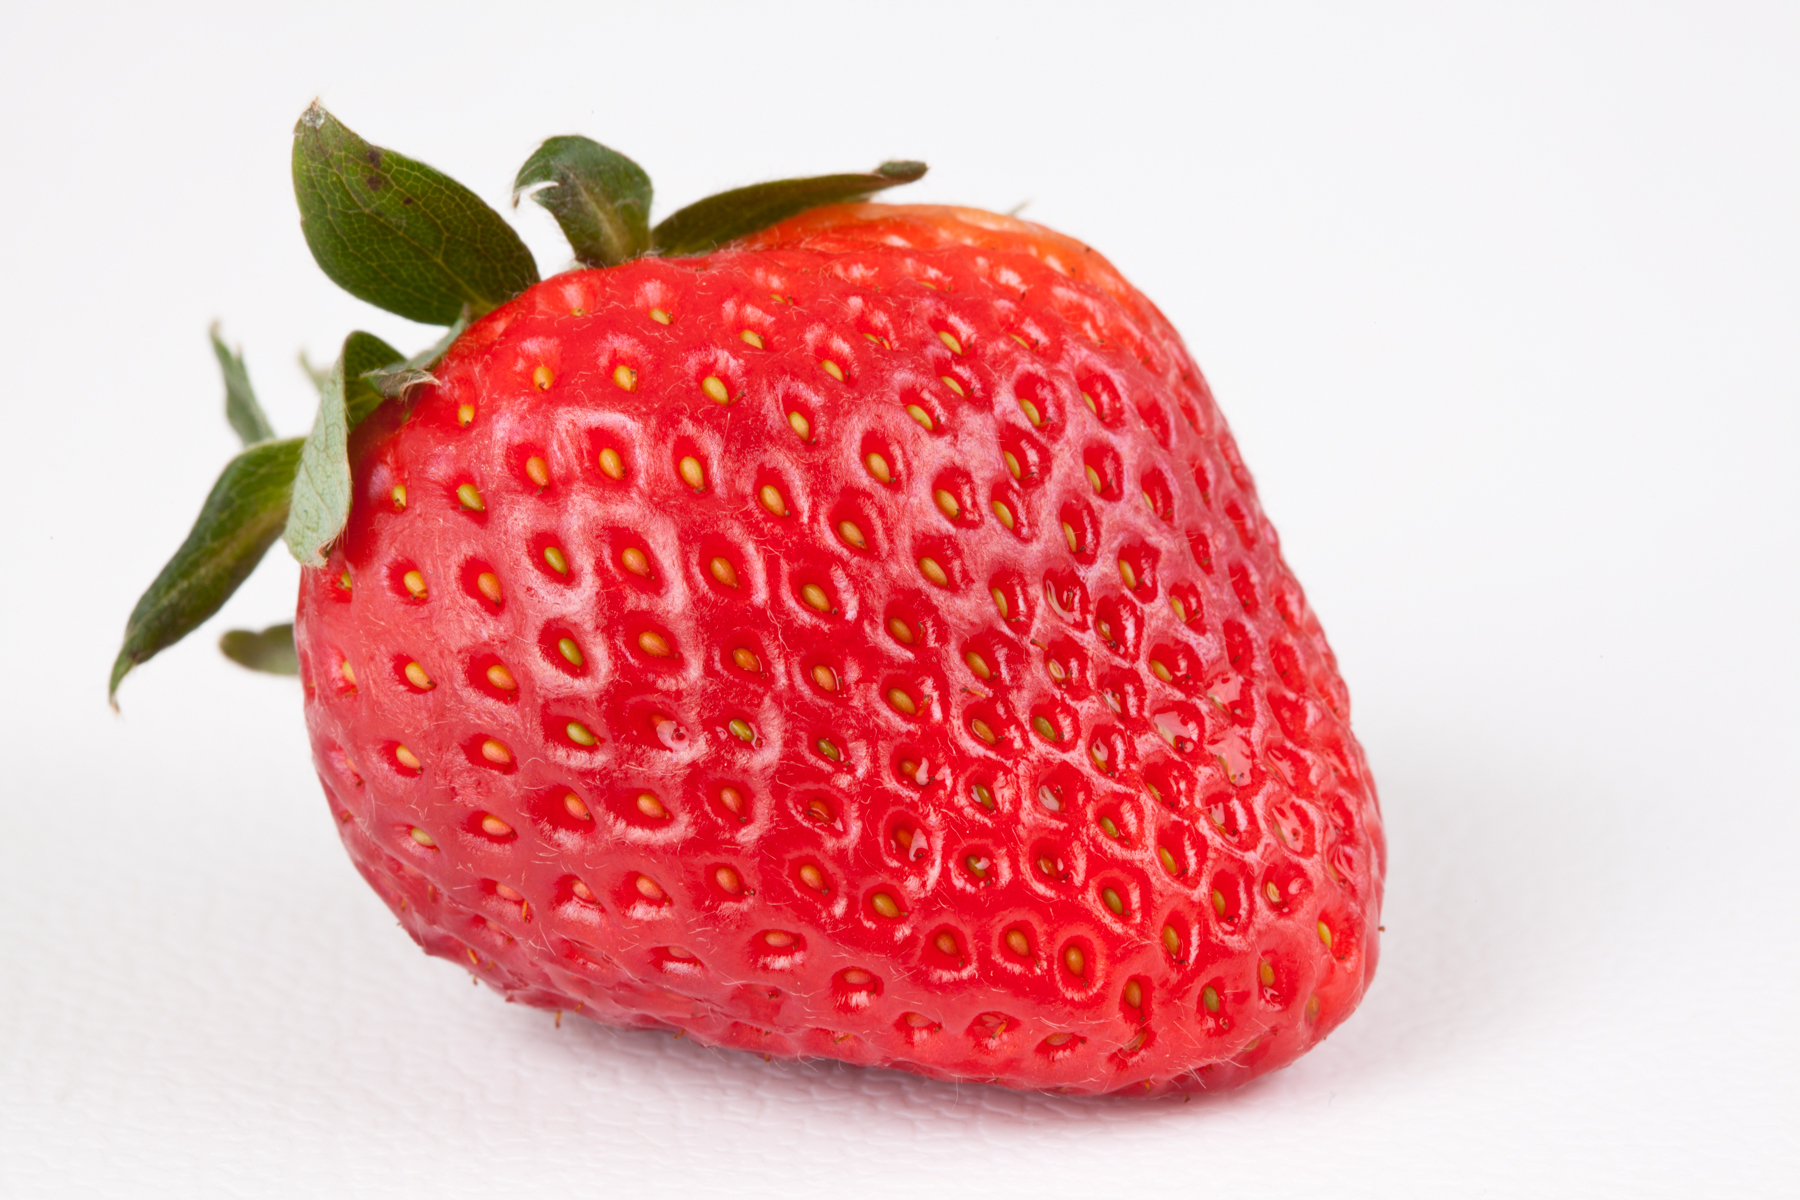 Strawberry close-up photo